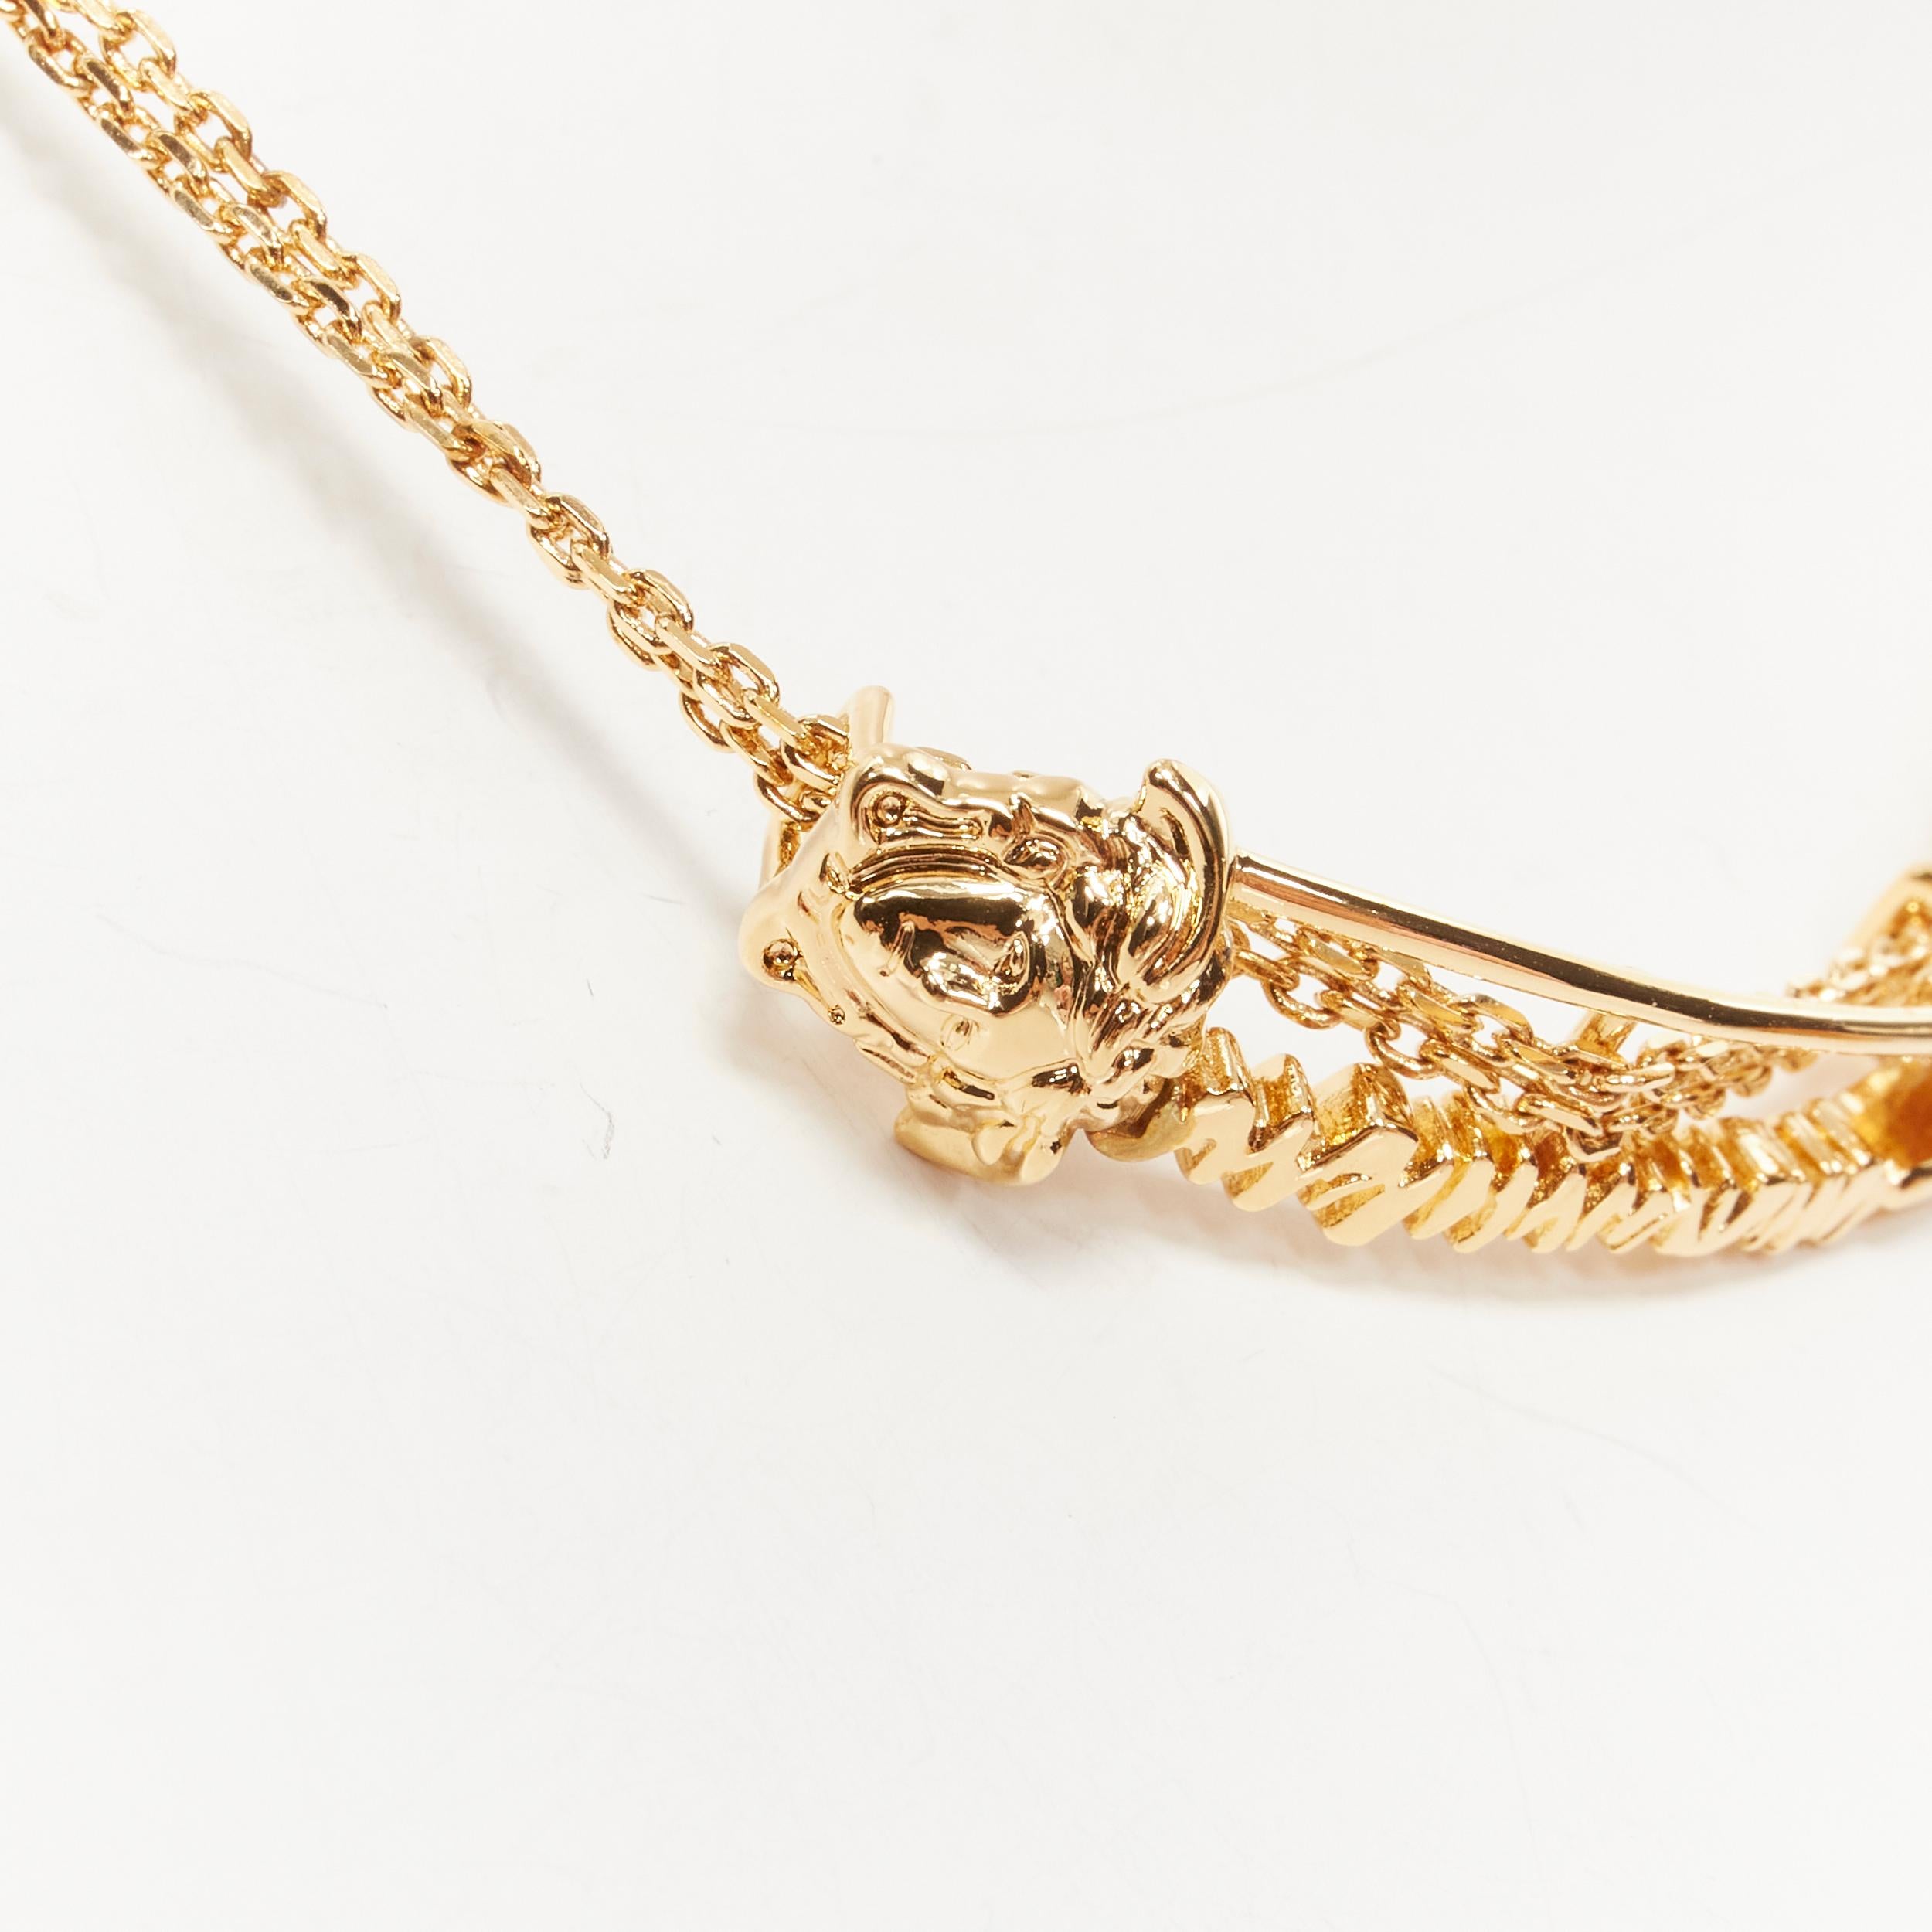 Gray new VERSACE Medusa Safety Pin pendant gold tone nickel short necklace choker